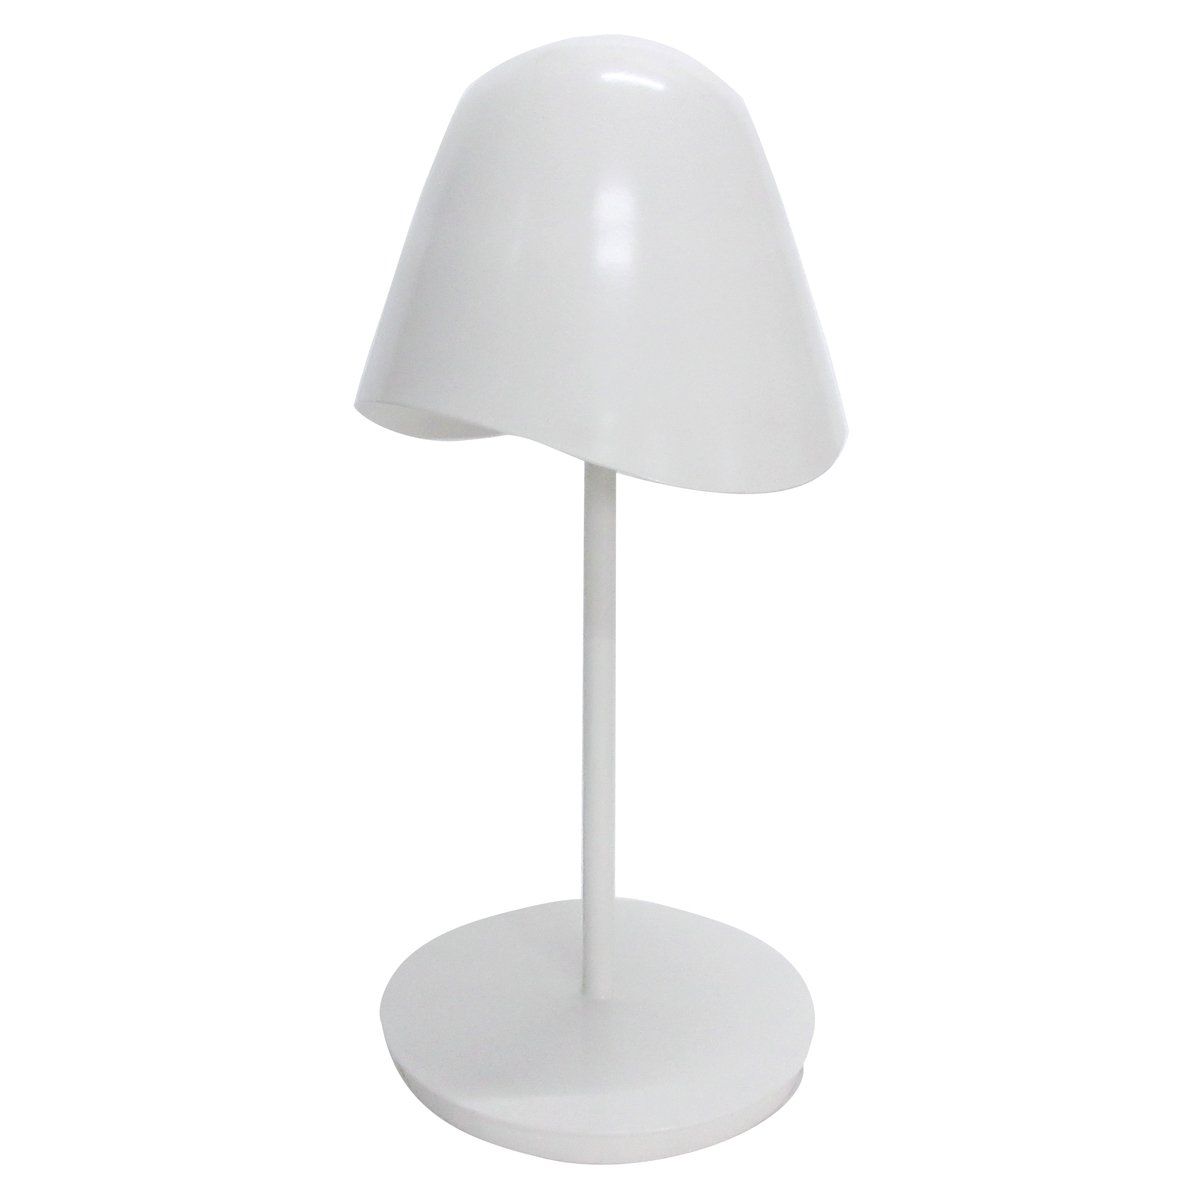 Lampe design SELINA blanche en métal